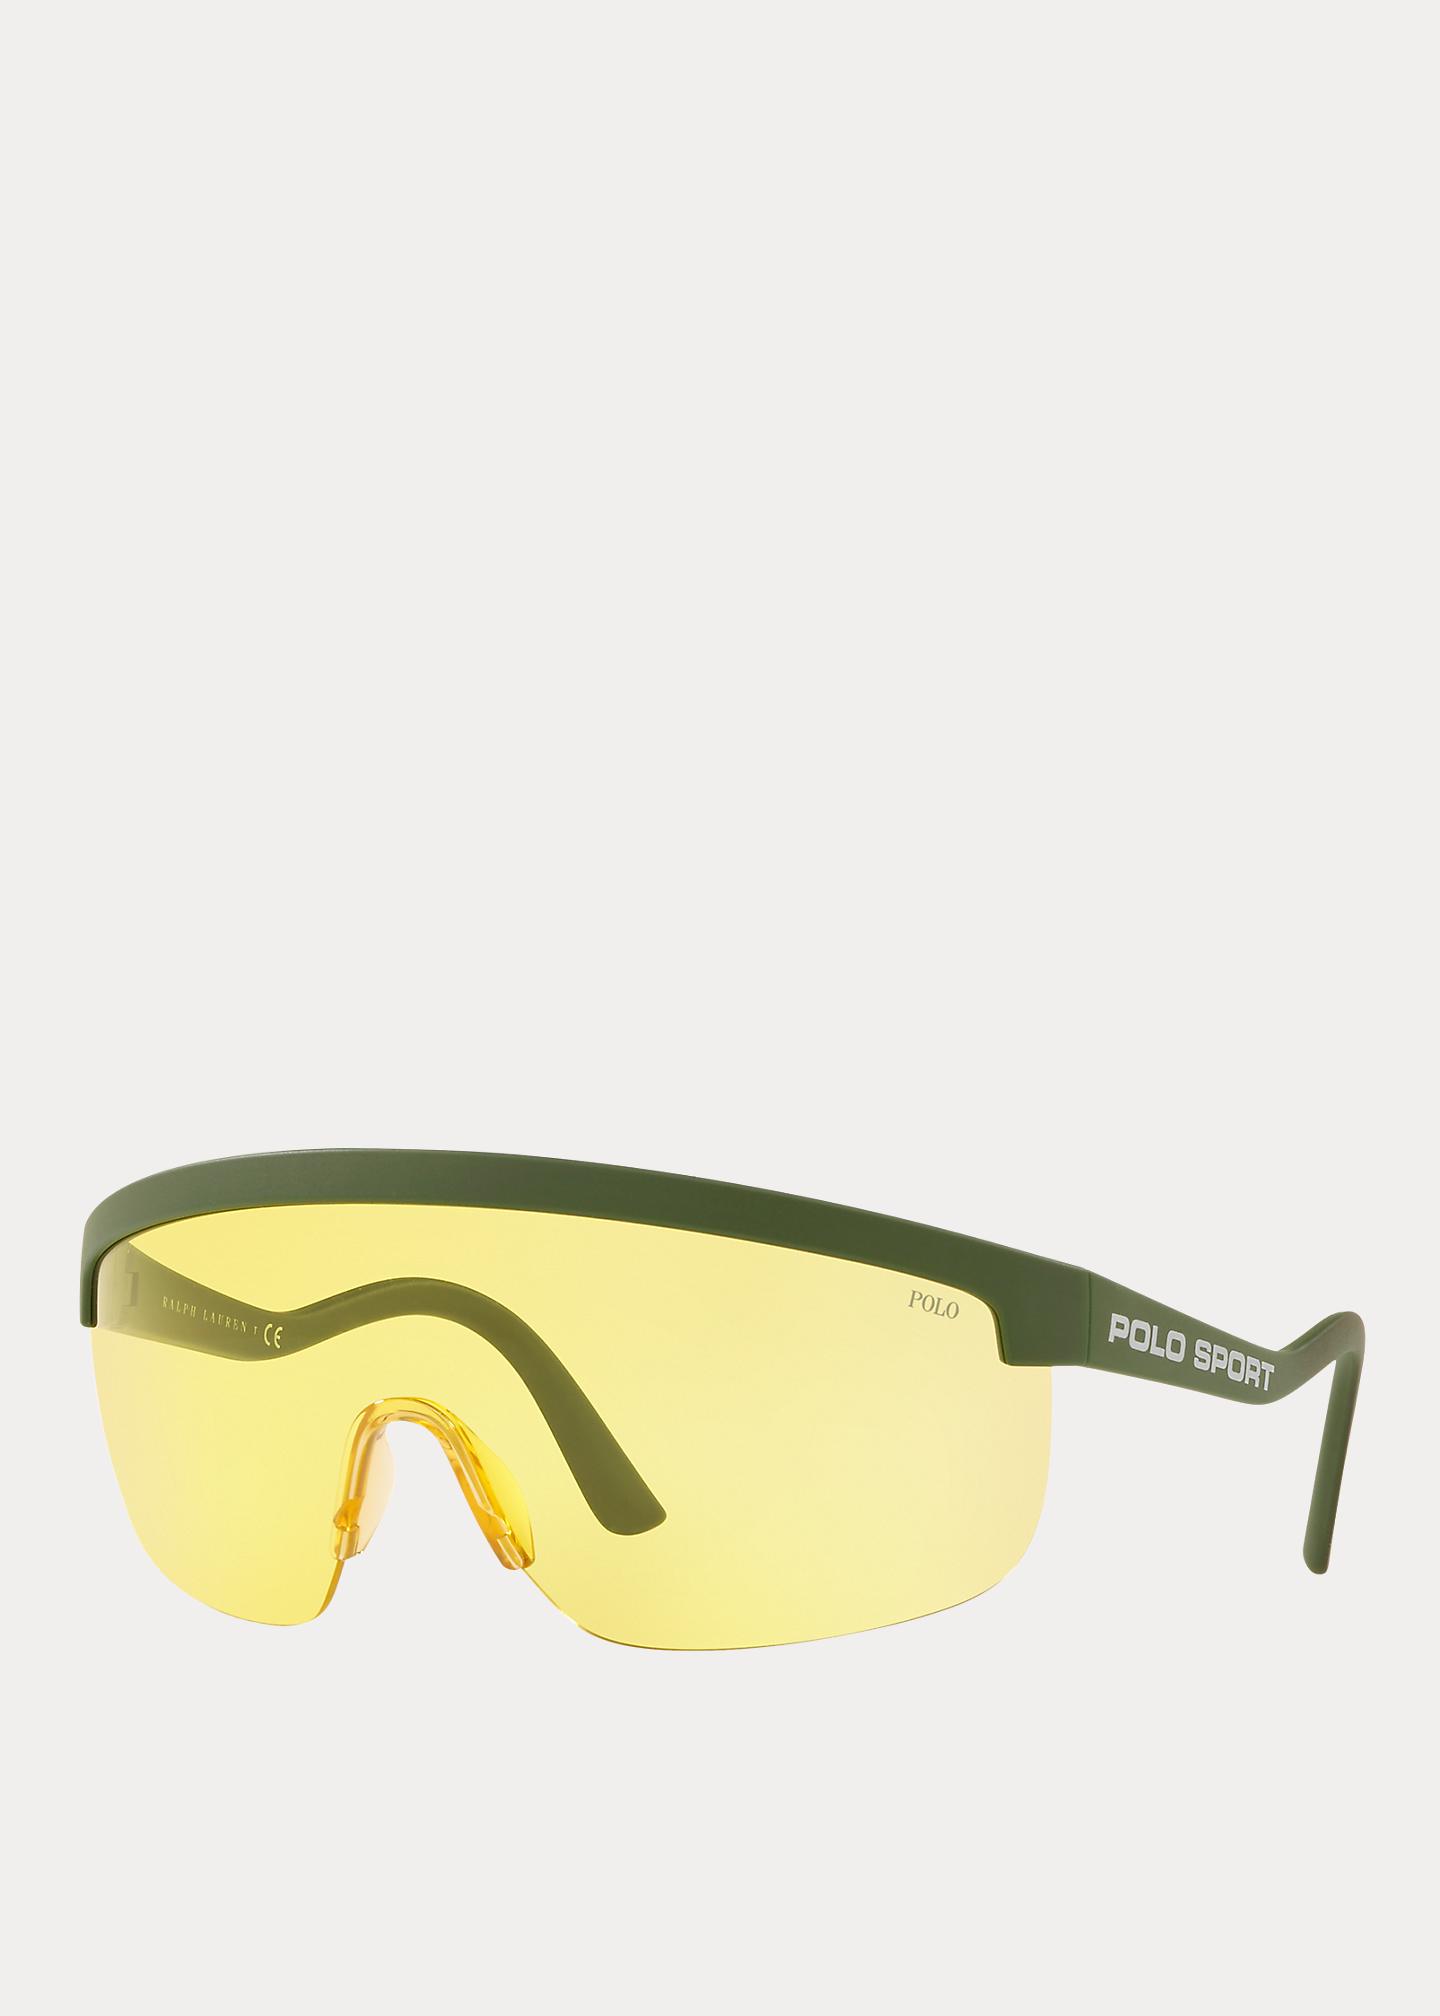 Polo Ralph Lauren Men's Polo Sport Shield Sunglasses